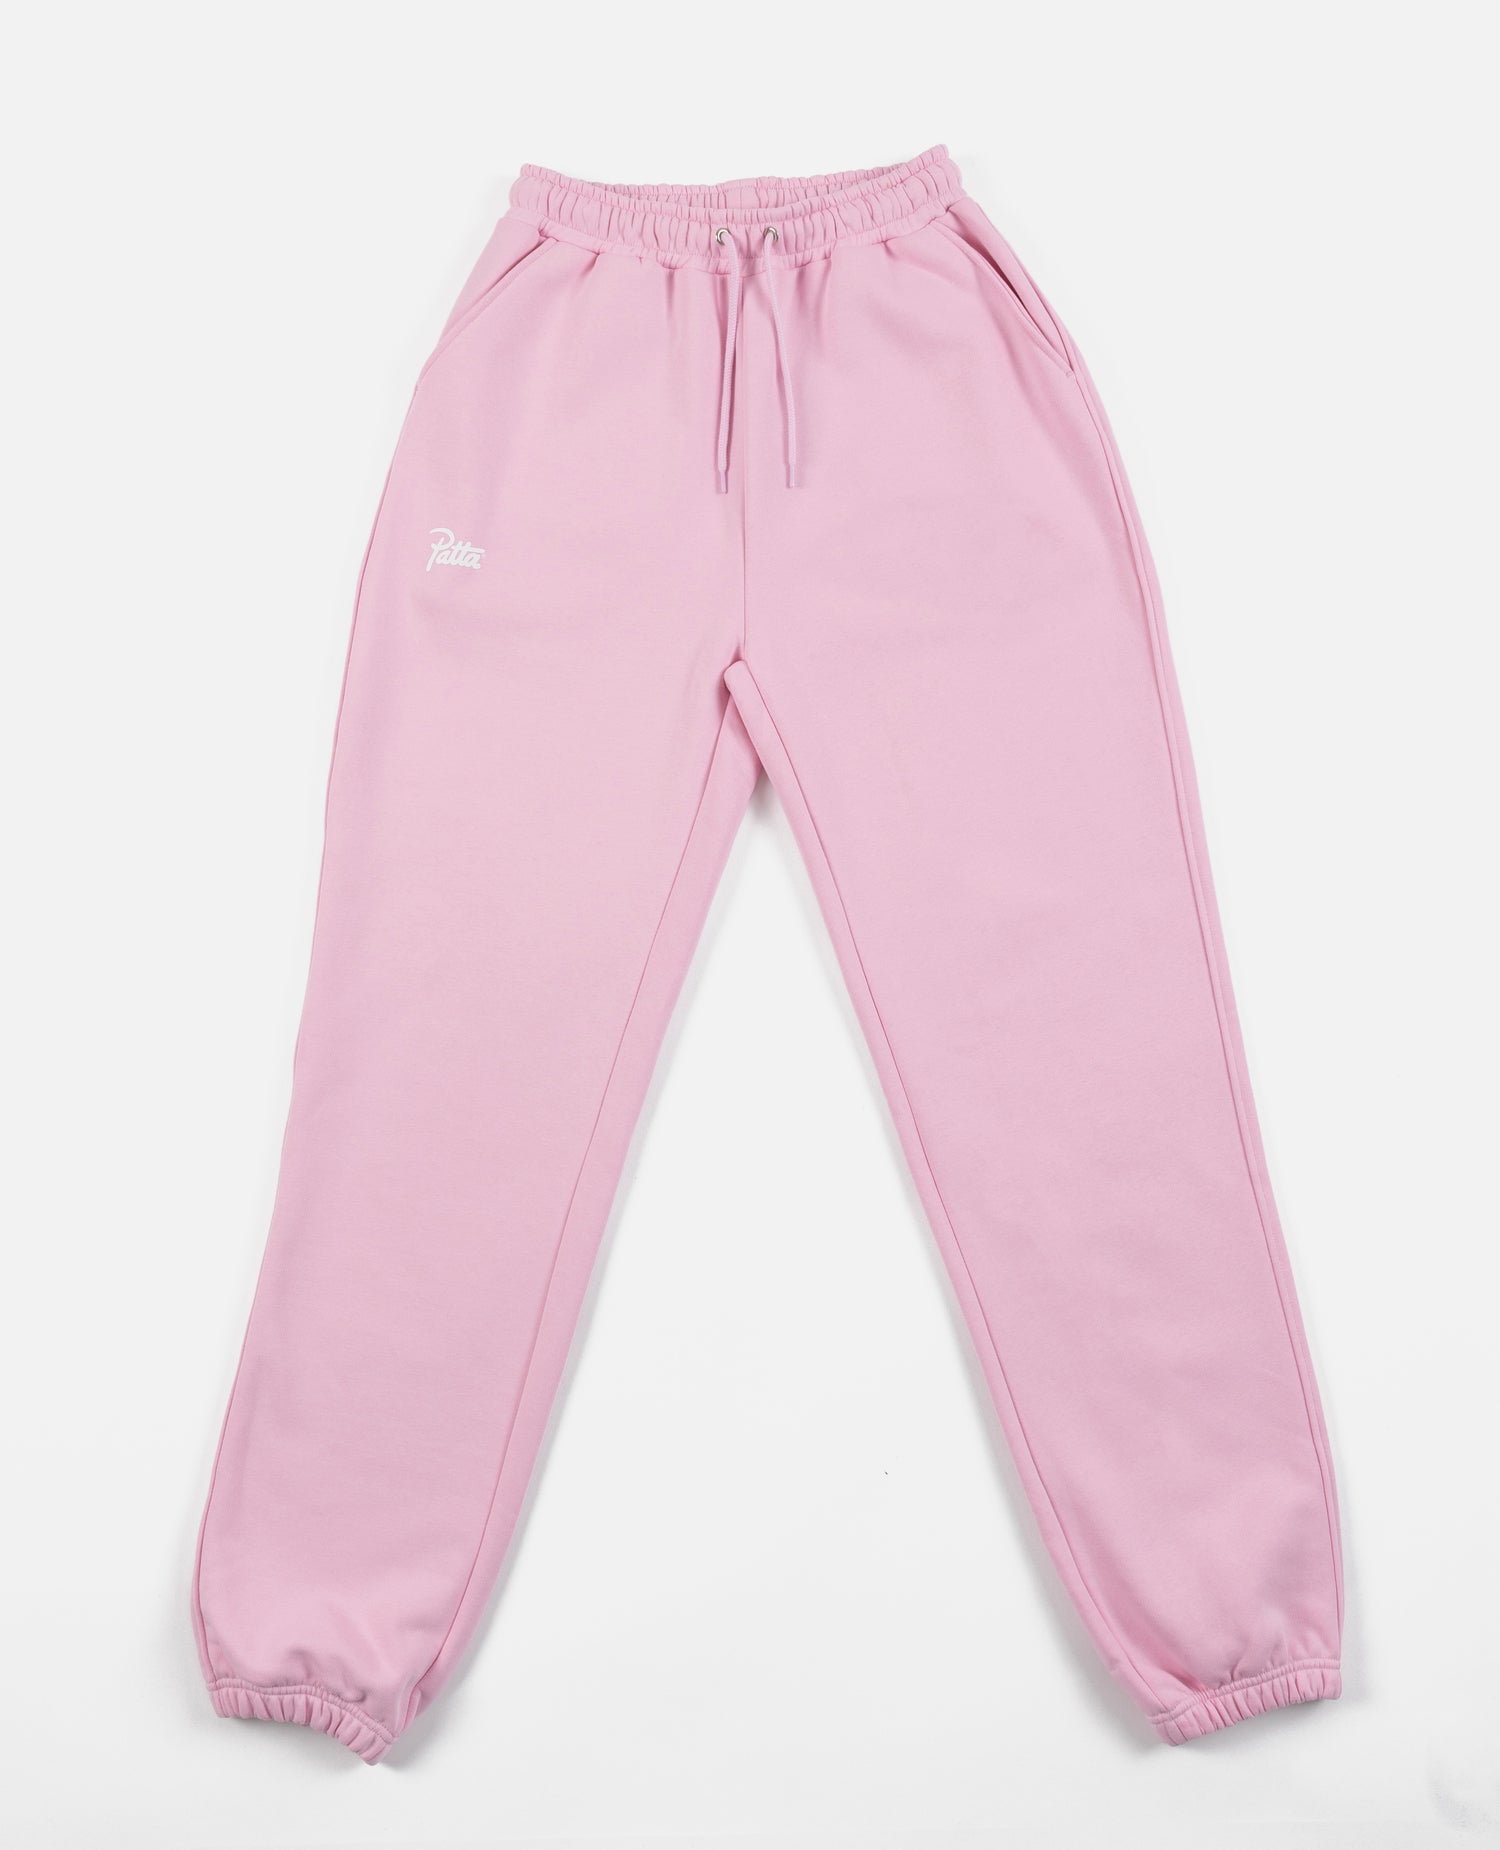 Pantaloni da jogging Patta Femme Basic (rosa culla)